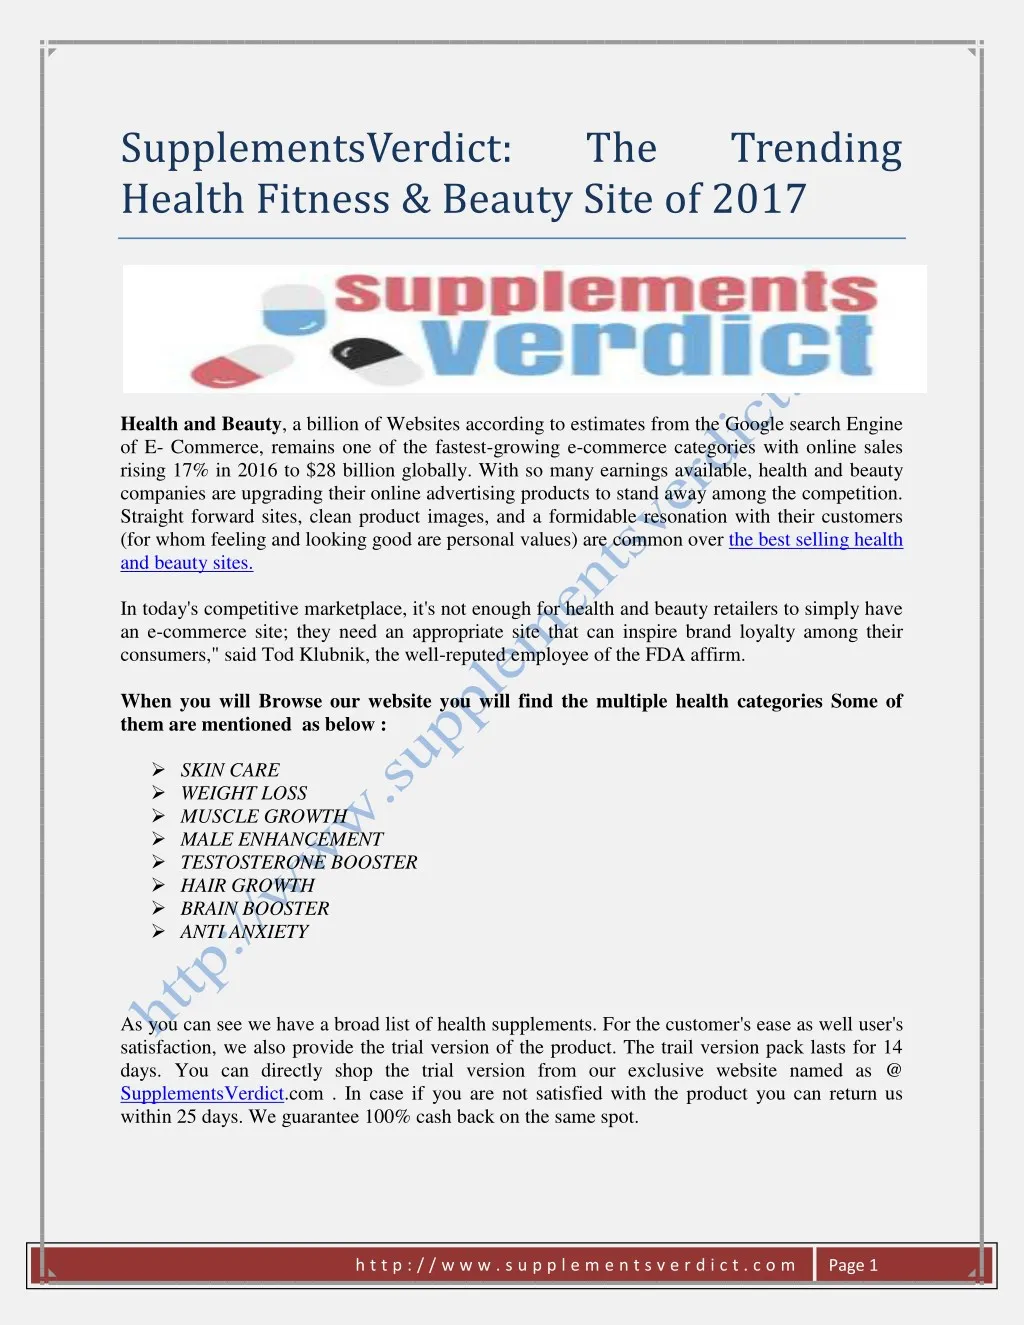 supplementsverdict health fitness beauty site